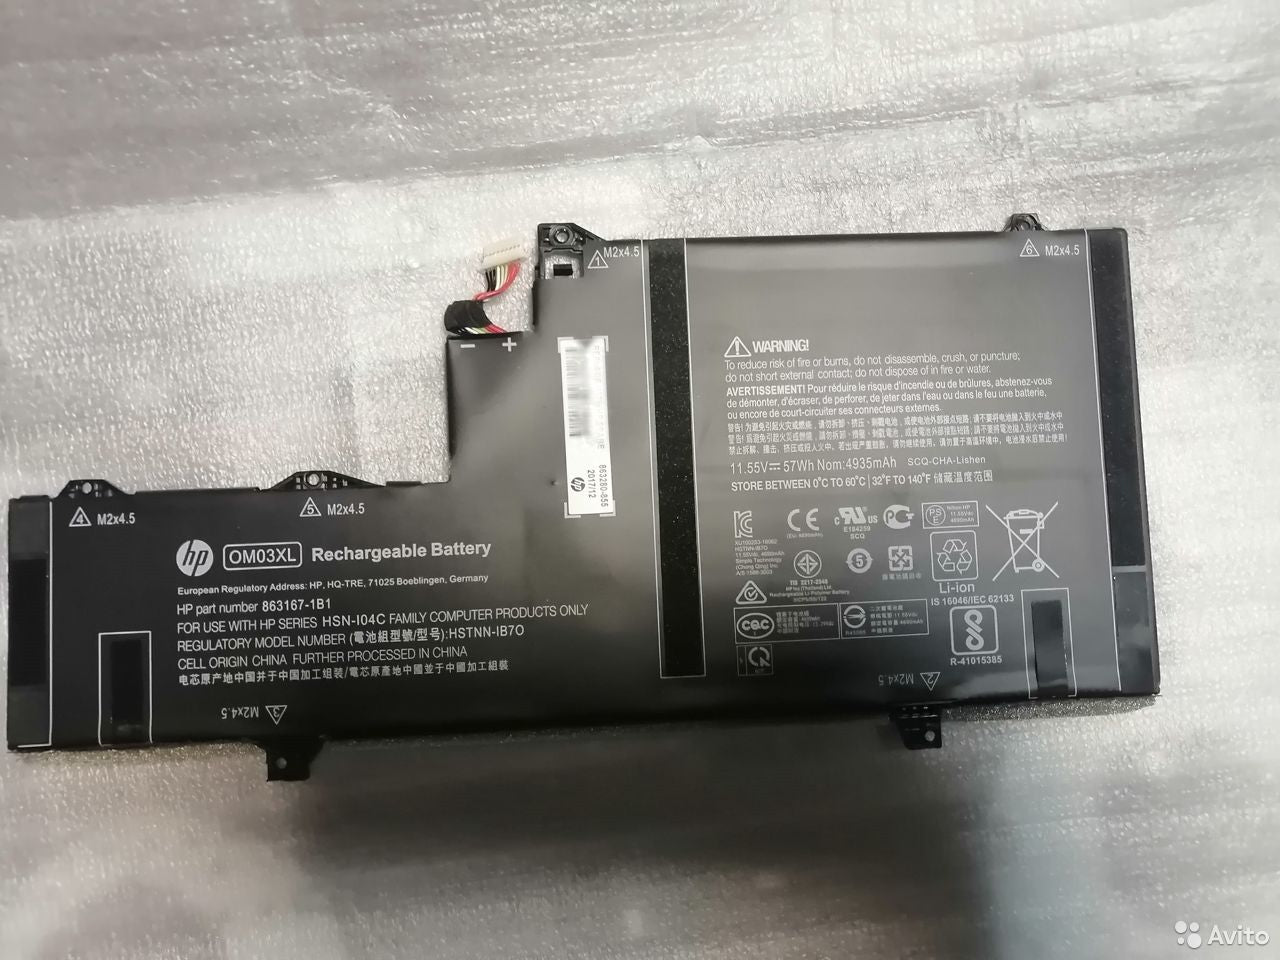 HP OM03XL  Laptop Battery